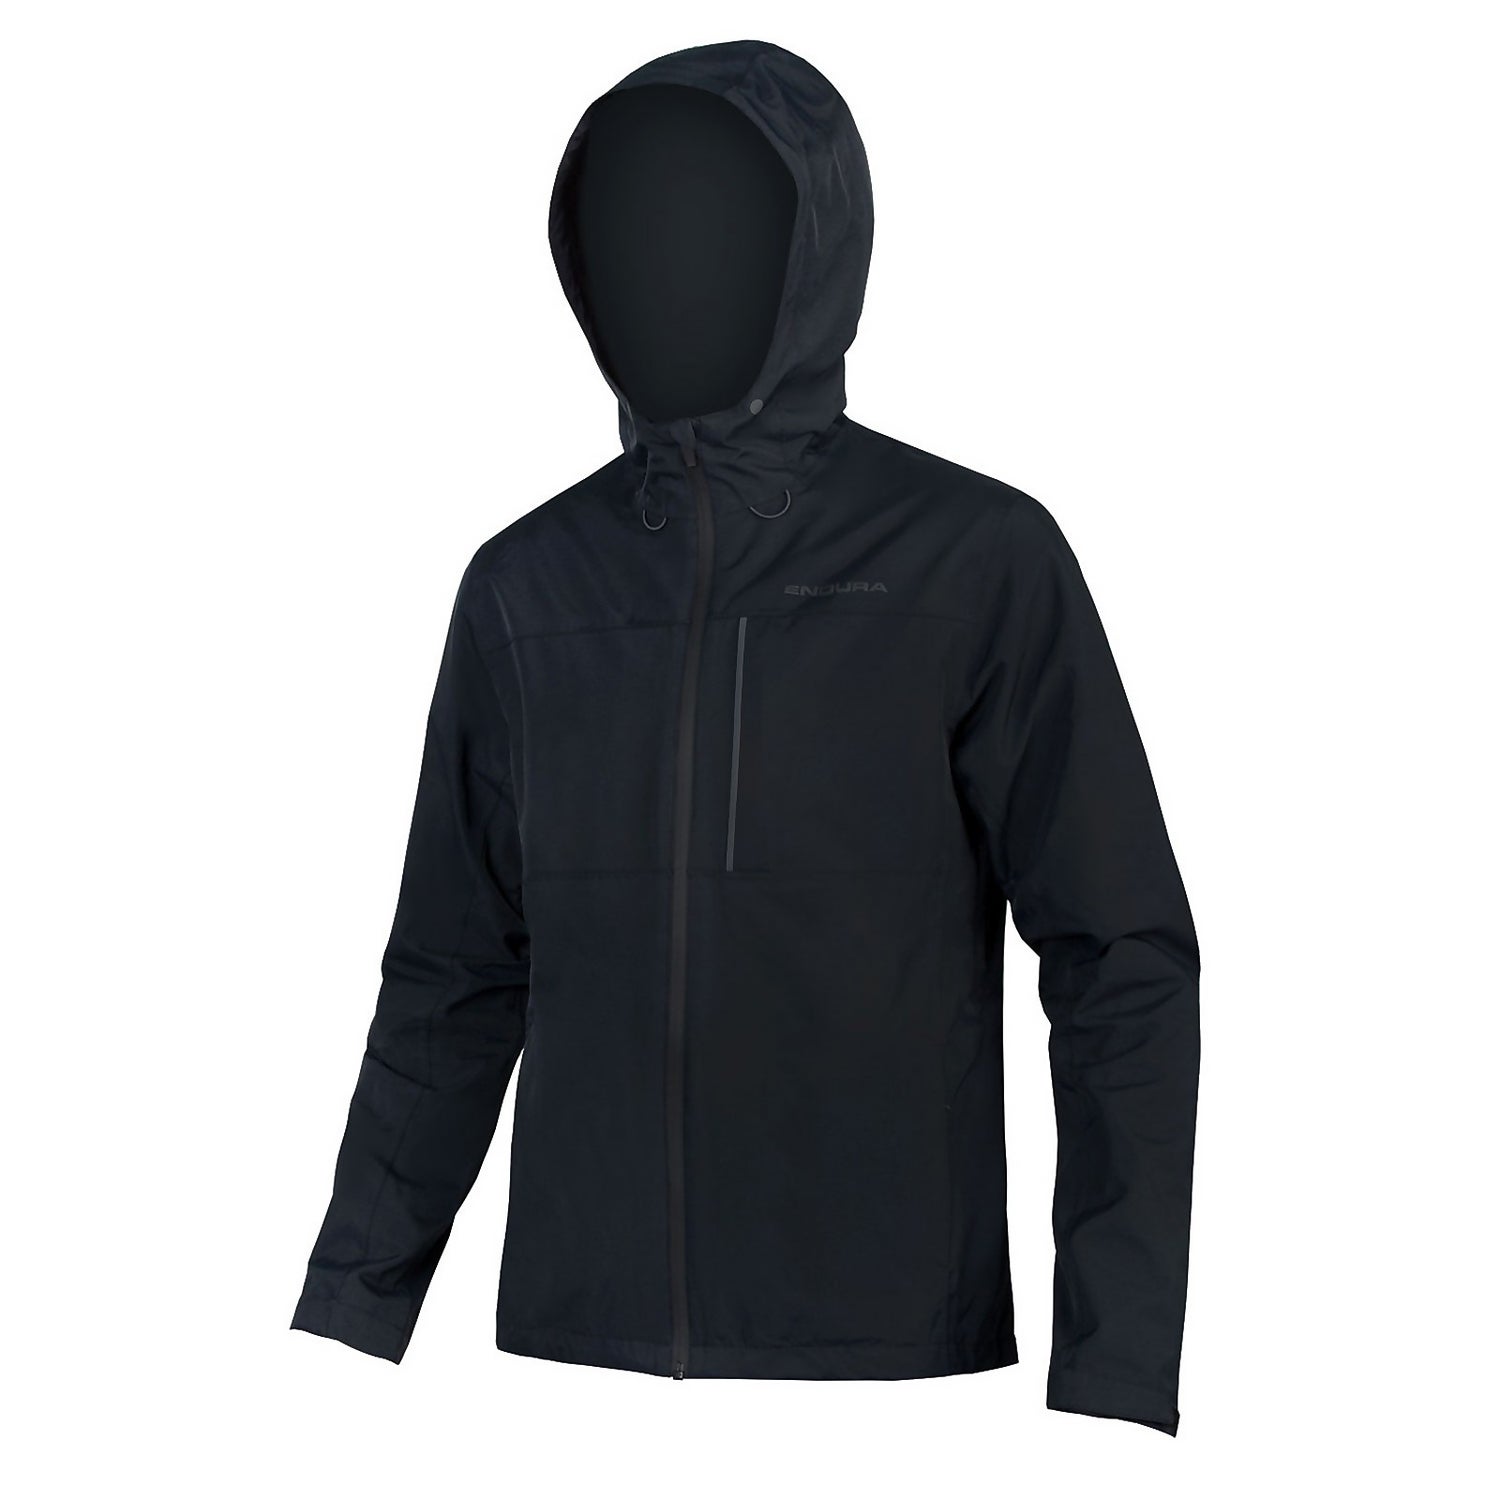 Men's Hummvee Waterproof Hooded Jacket - Black - XXXL